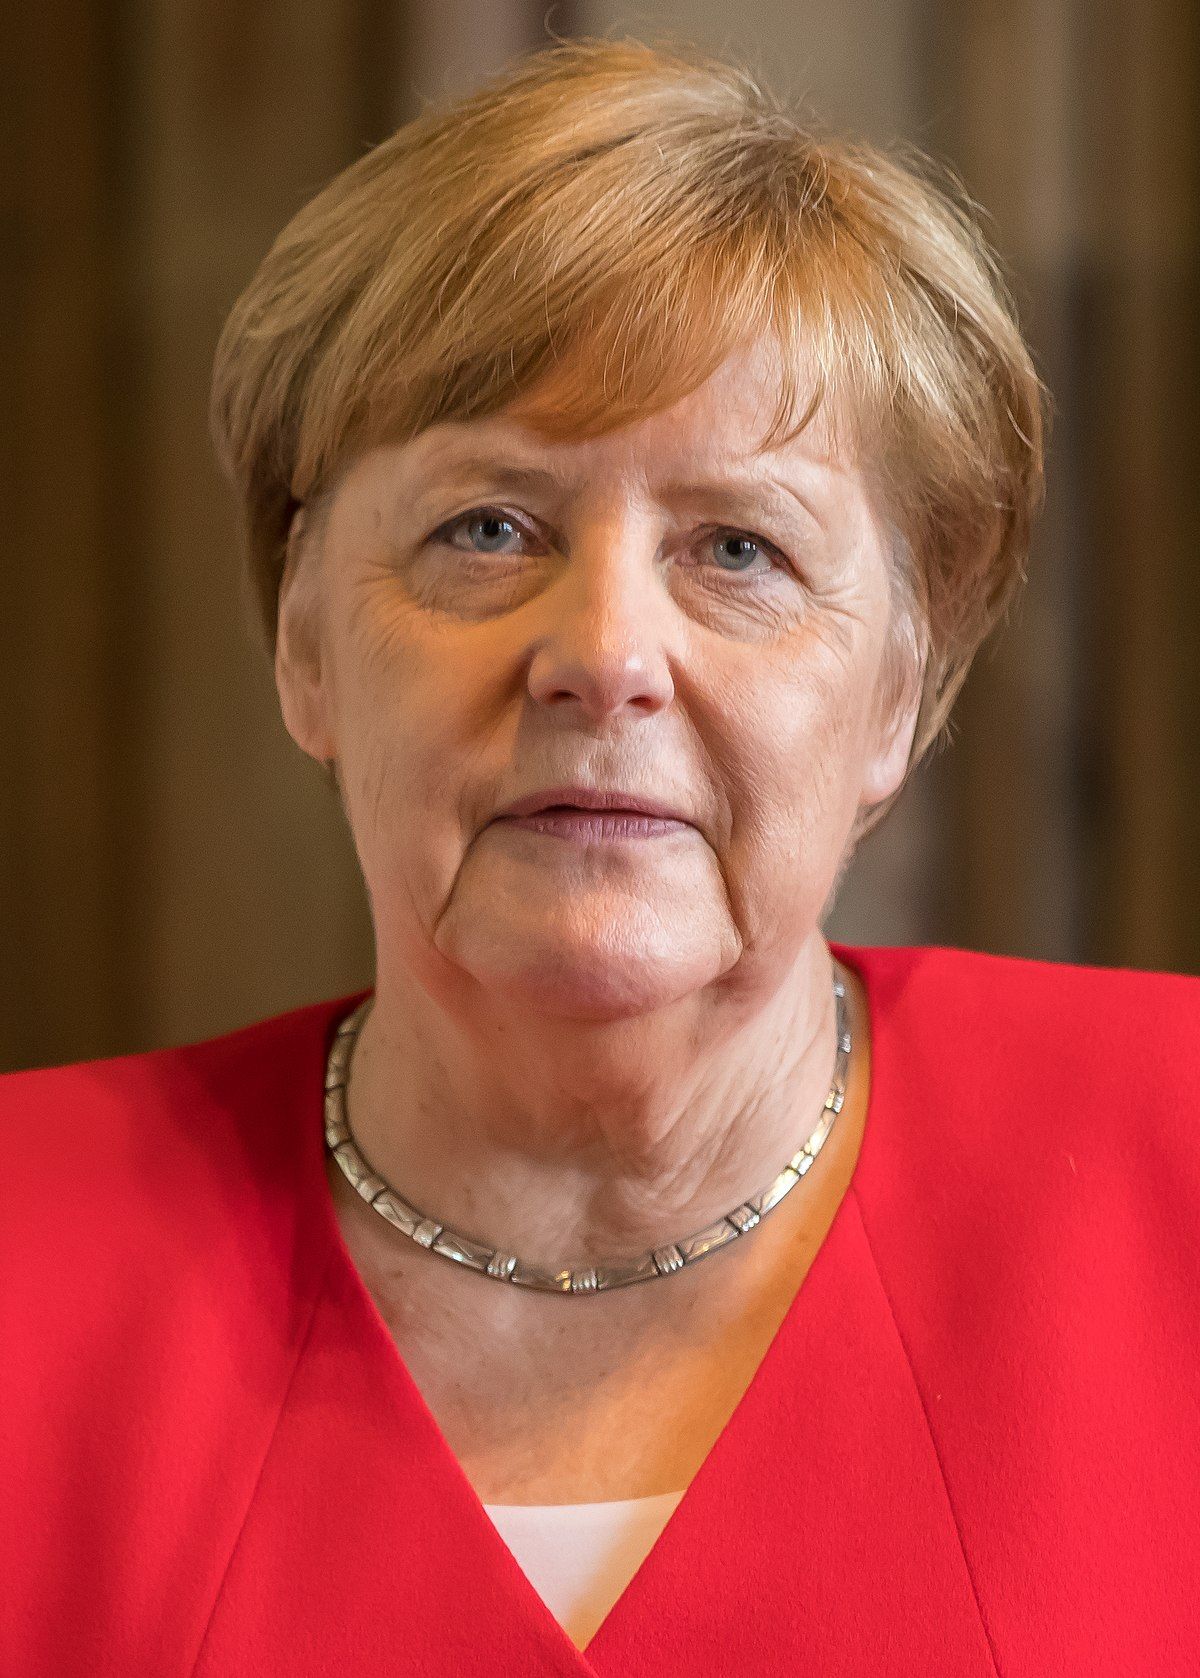 Angela Merkel reagiert auf fnrapper music